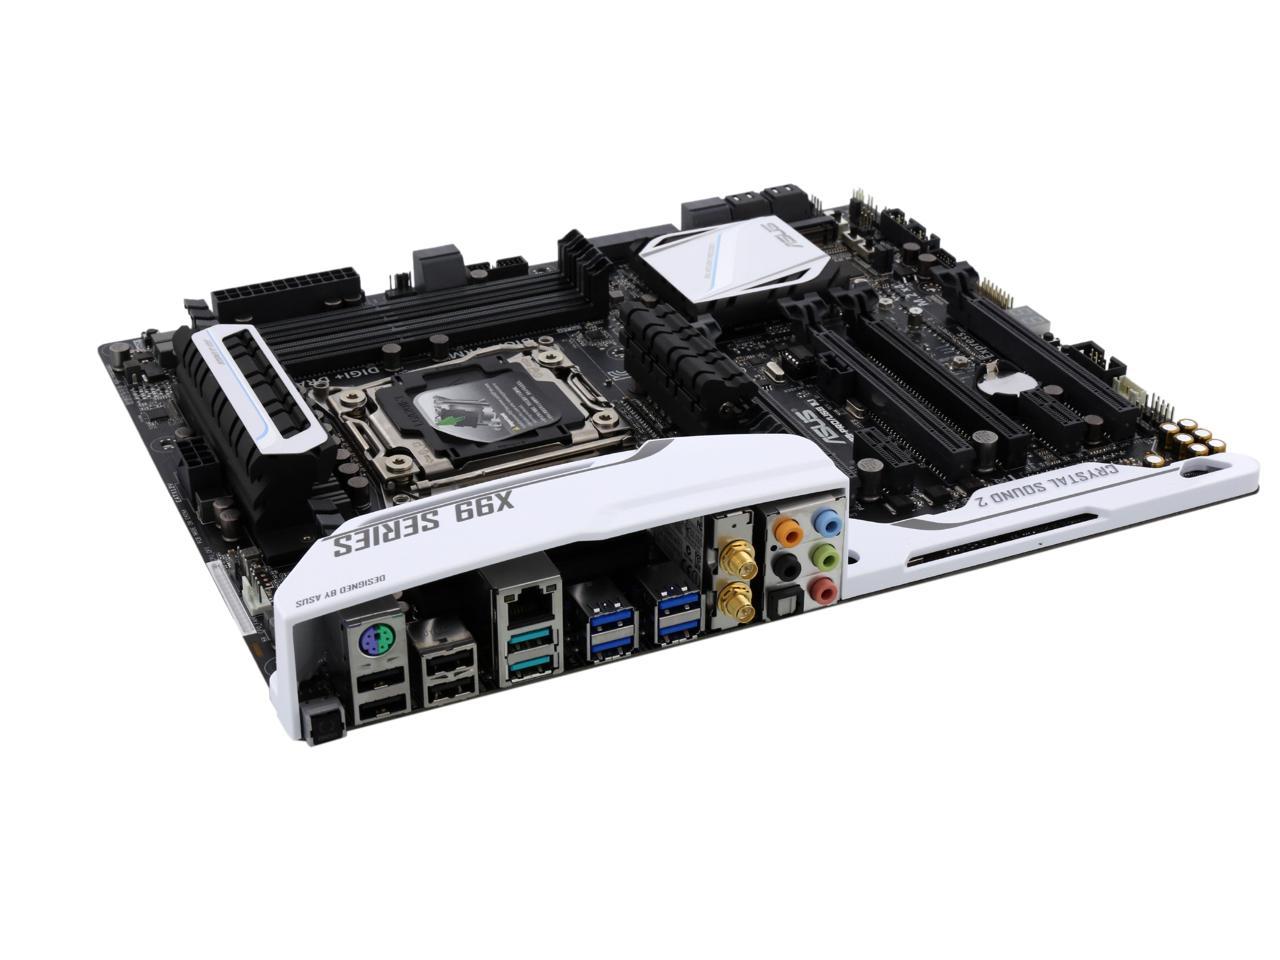 ASUS X99-PRO/USB 3.1 LGA 2011-v3 ATX Intel Motherboard - Newegg.ca